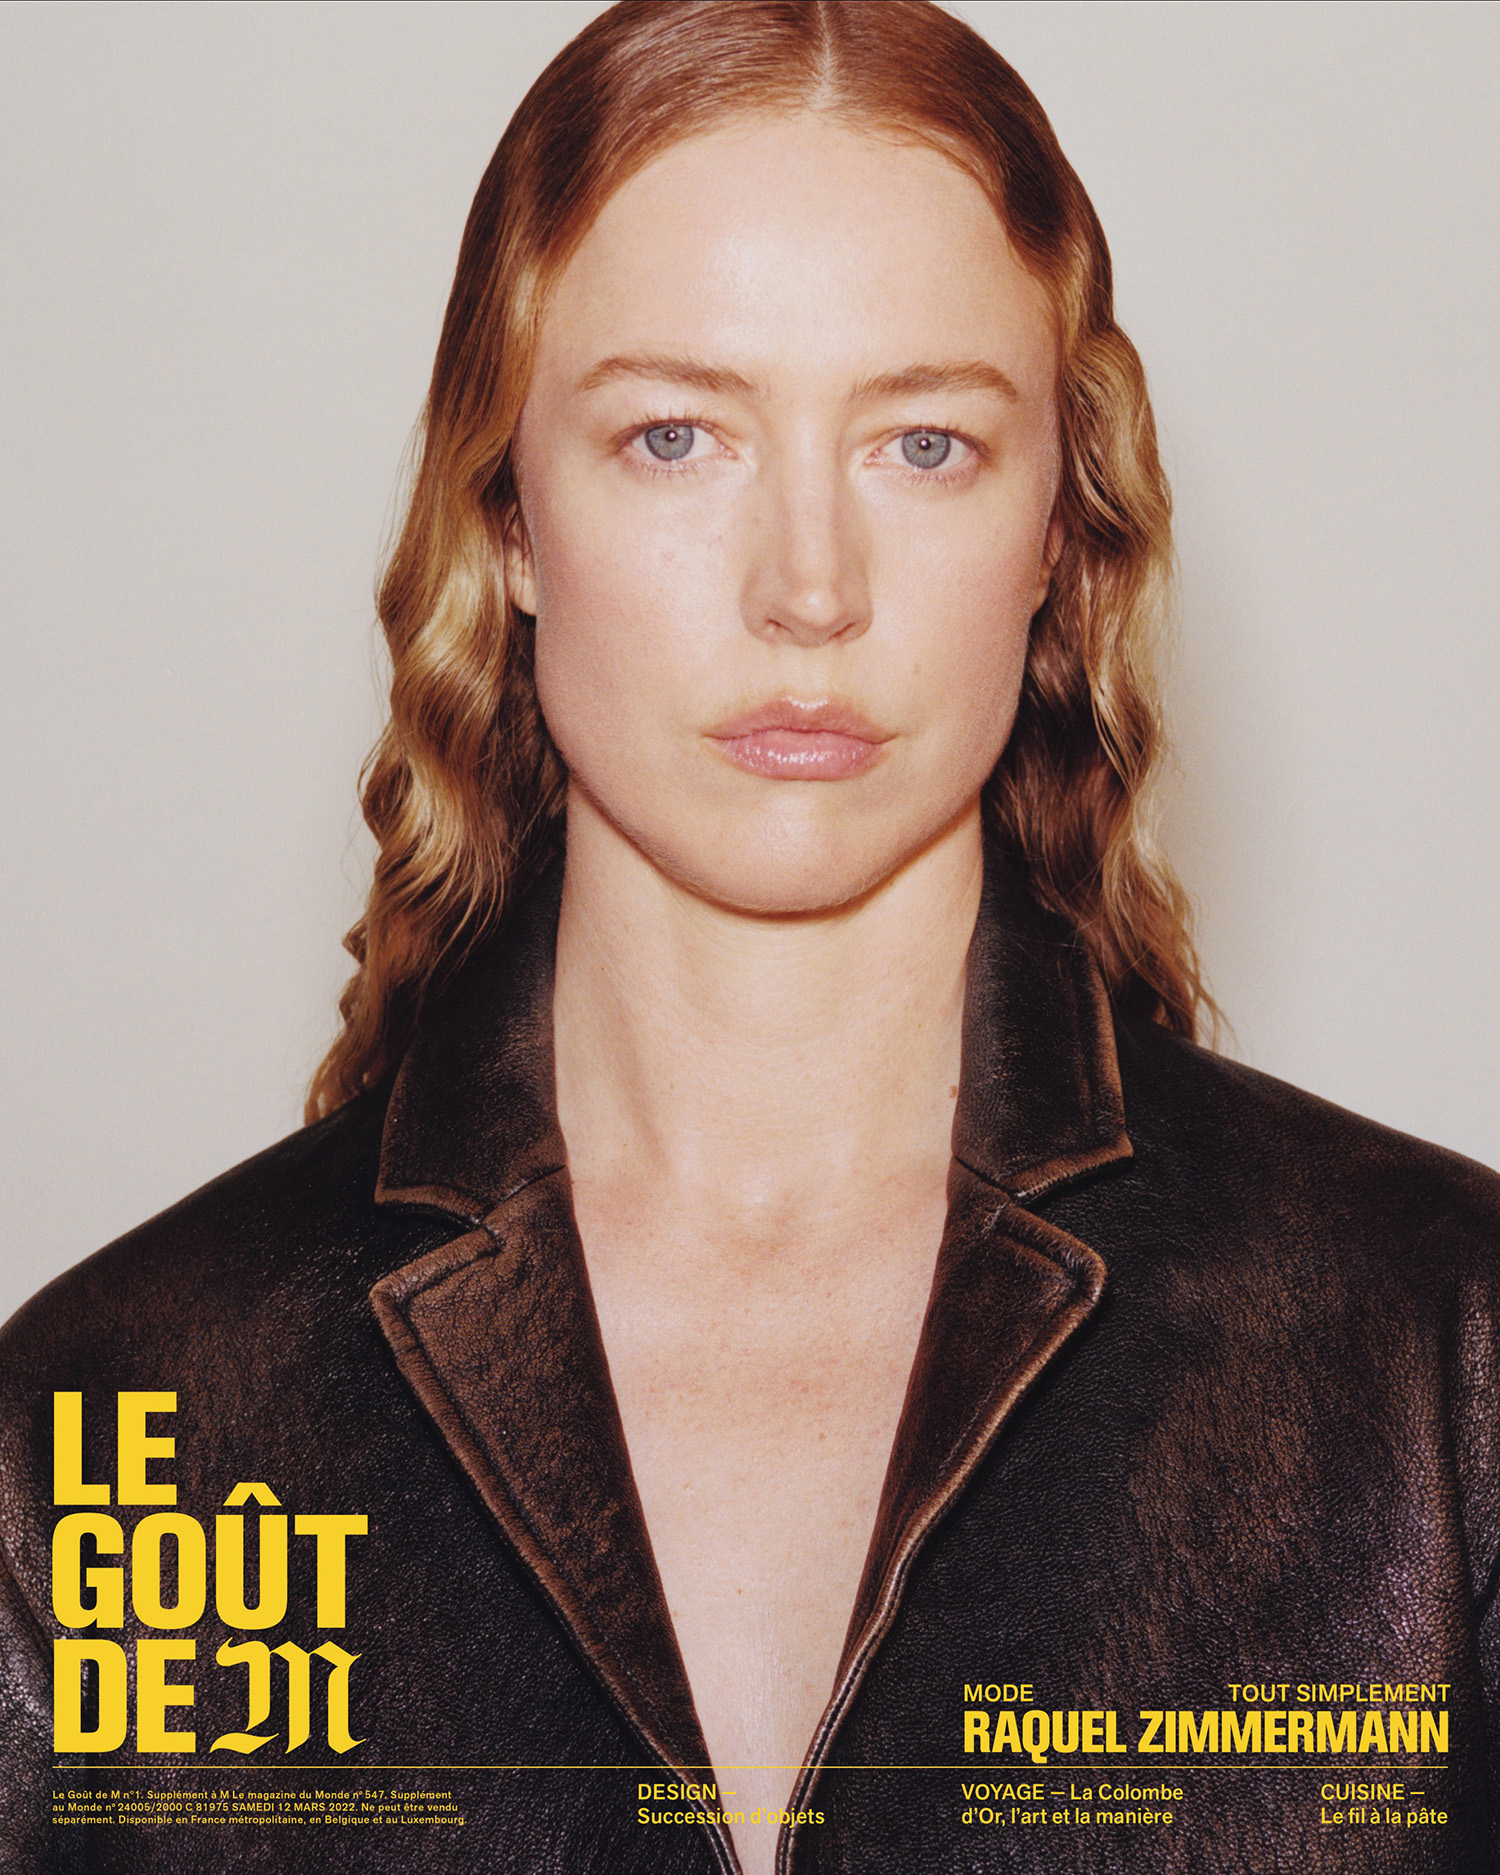 Raquel Zimmermann covers Le Goût de M March 12th, 2022 by Drew Vickers